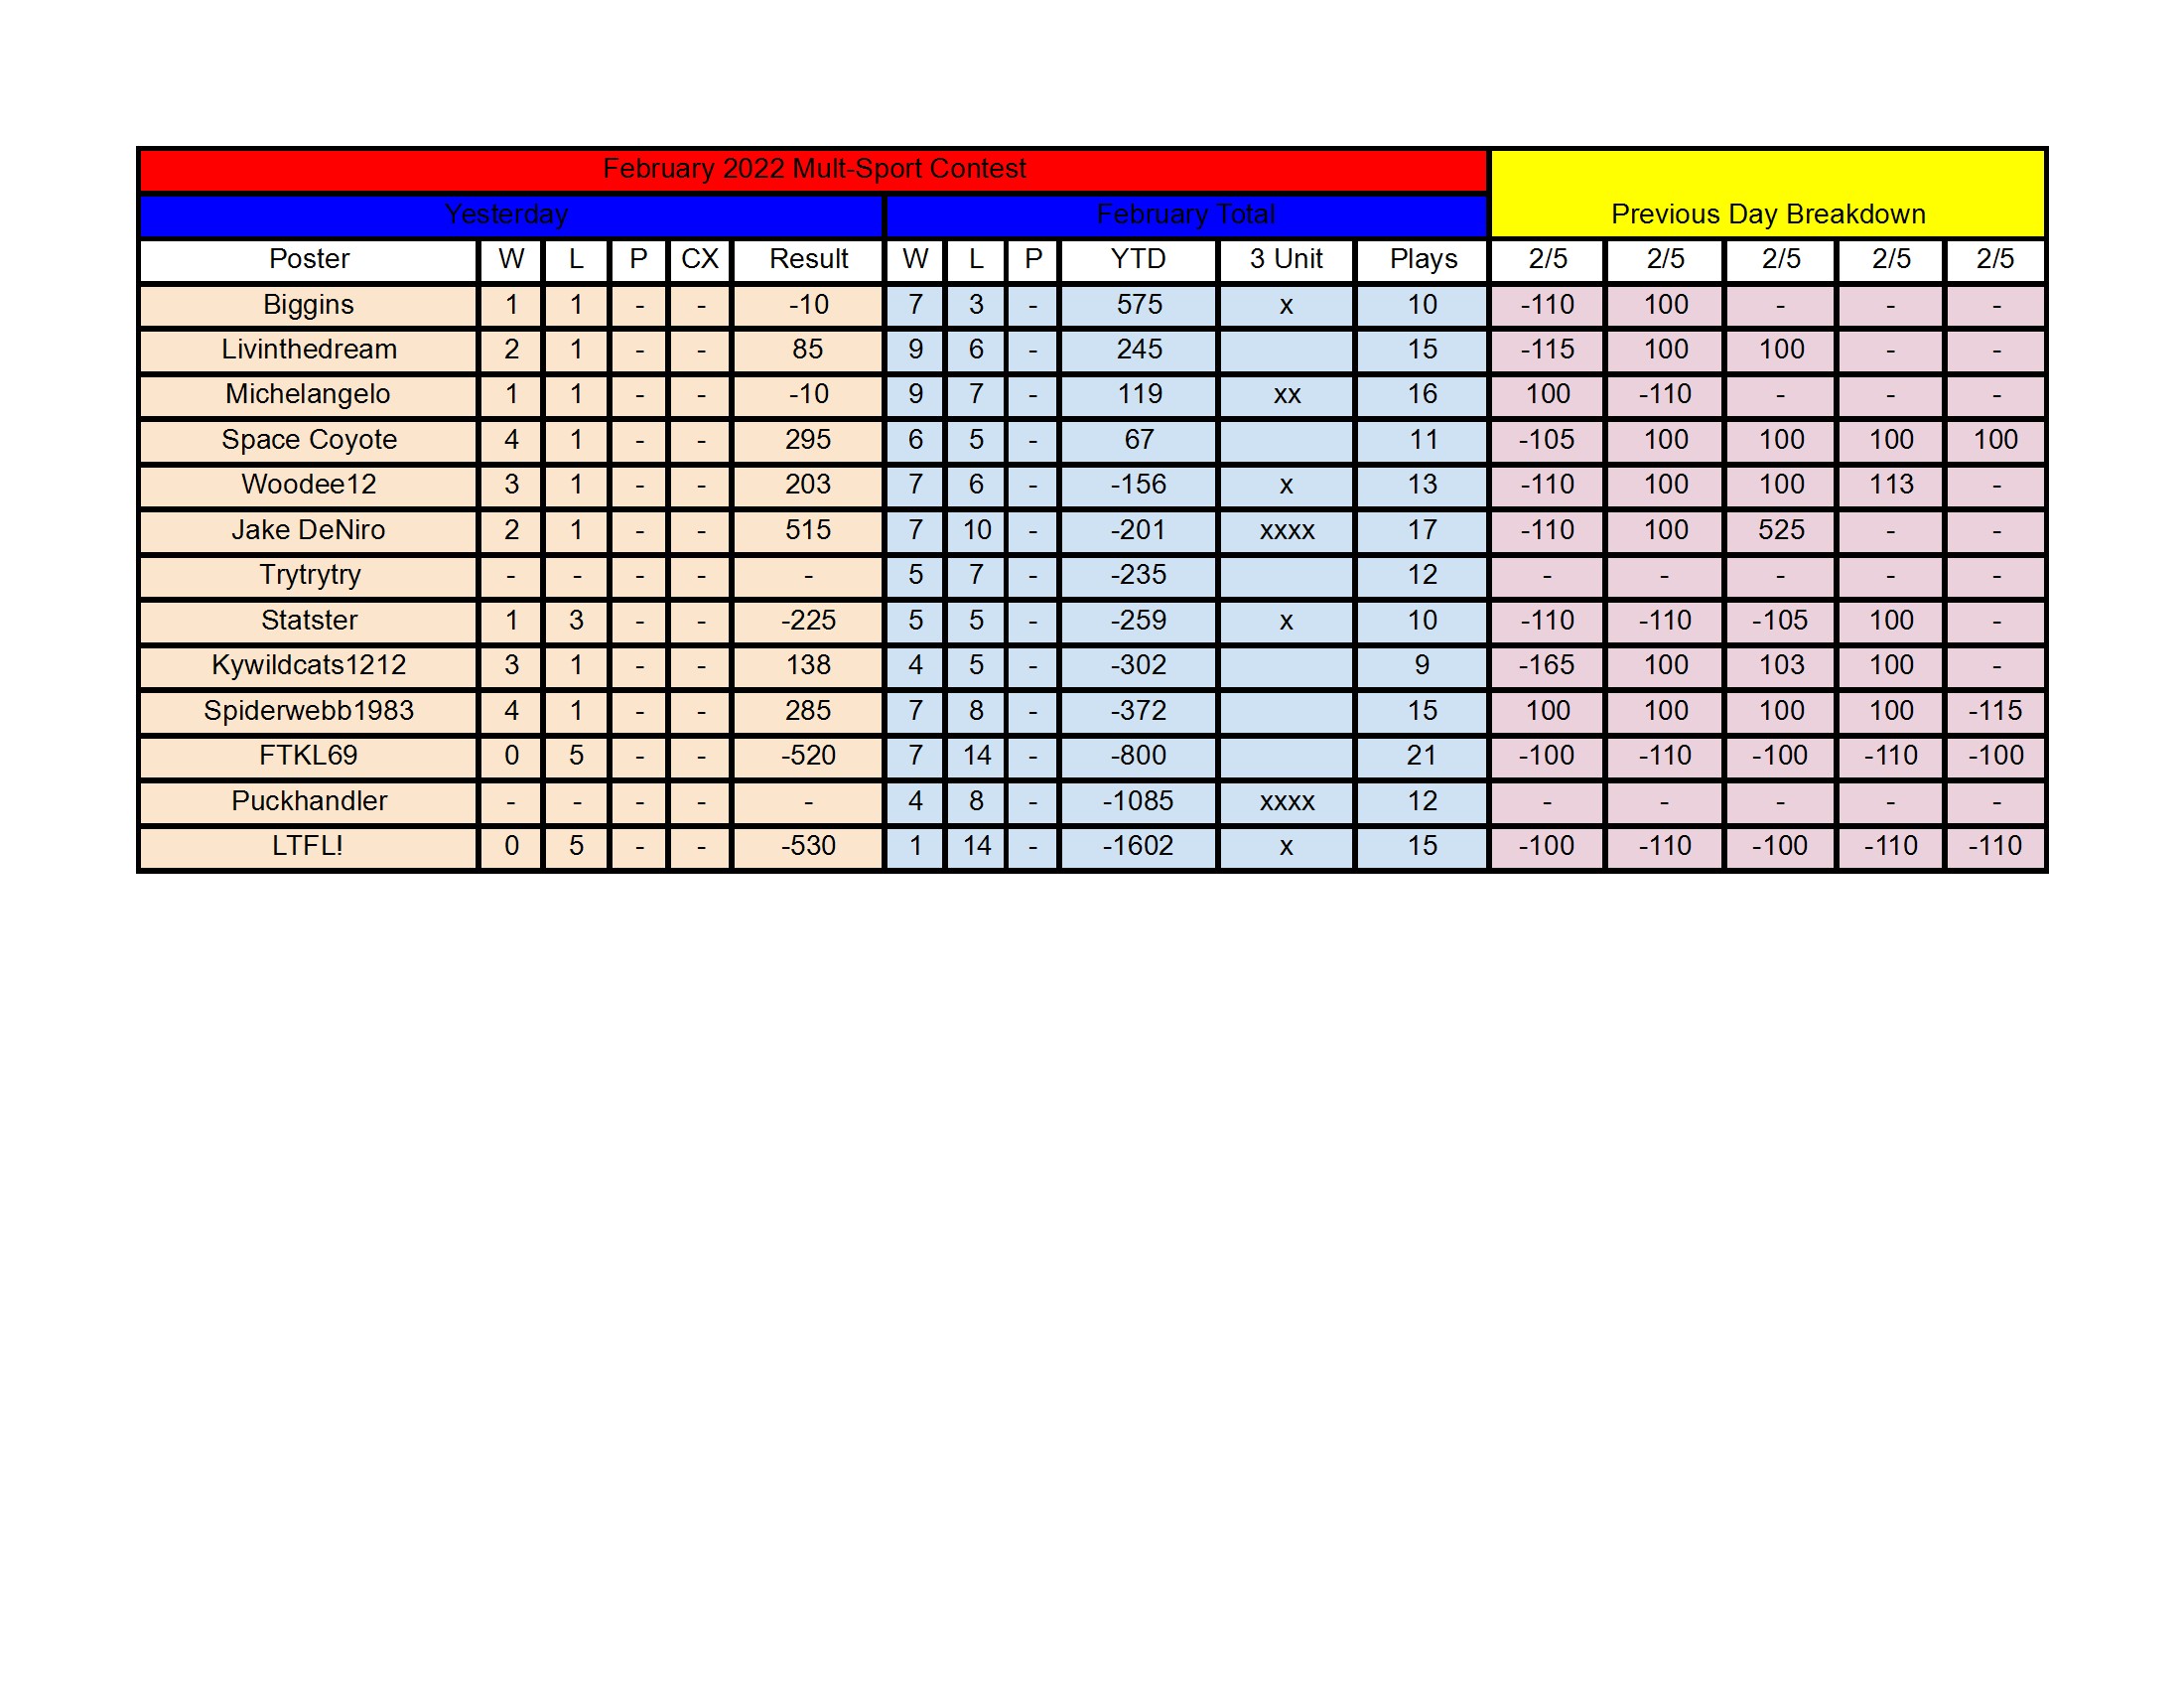 February Standings - 2_5 conv 1.jpeg